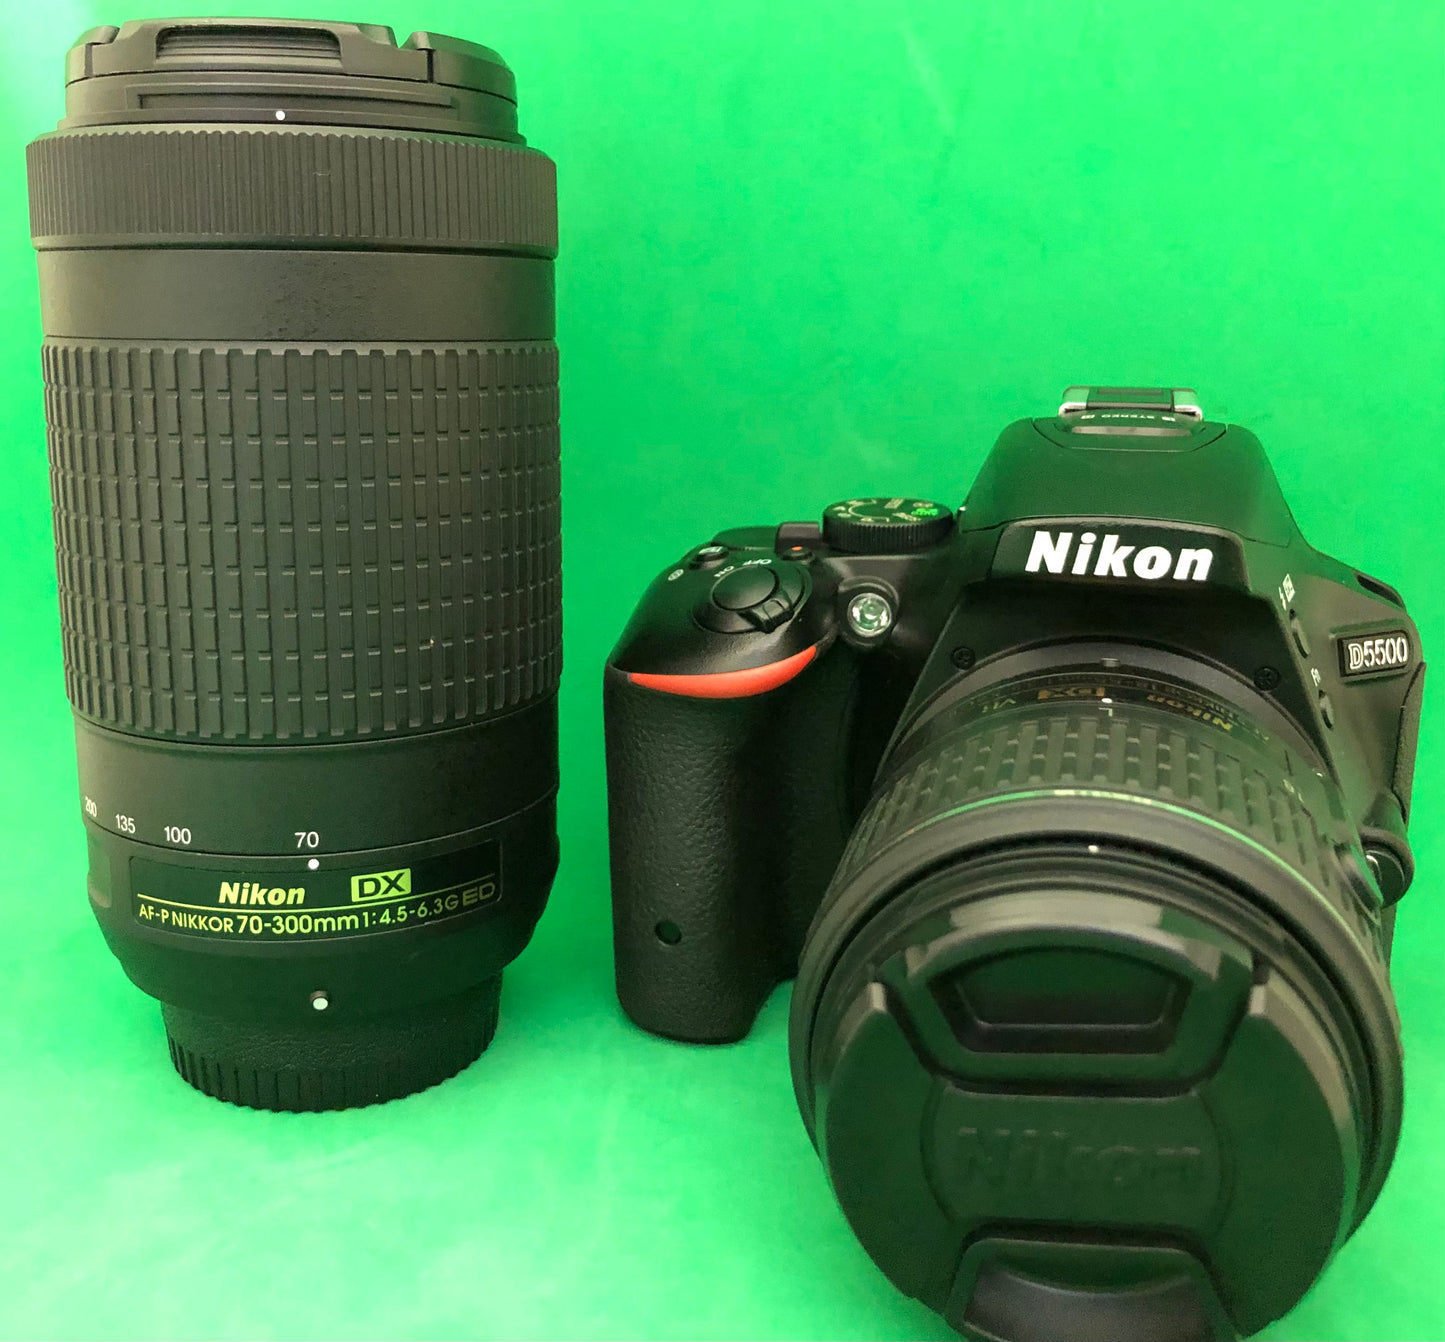 Nikon D5500 DX-format Digital SLR Dual Lens Kit (used)